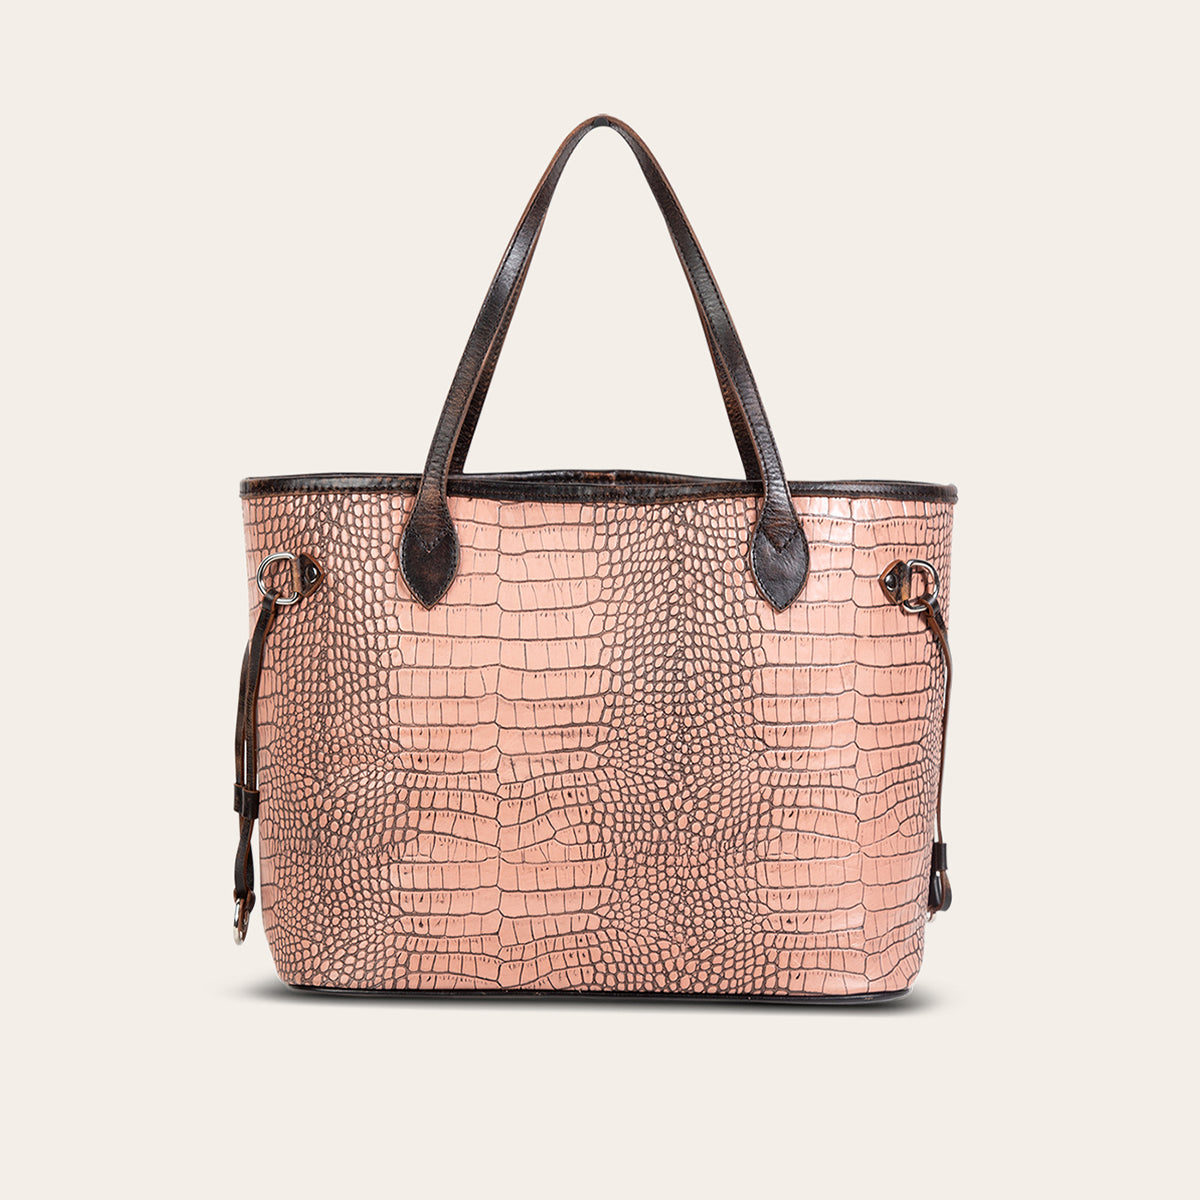 FREEBIRD Mara pink croco embossed leather tote bag with top handles and interior zip pocket